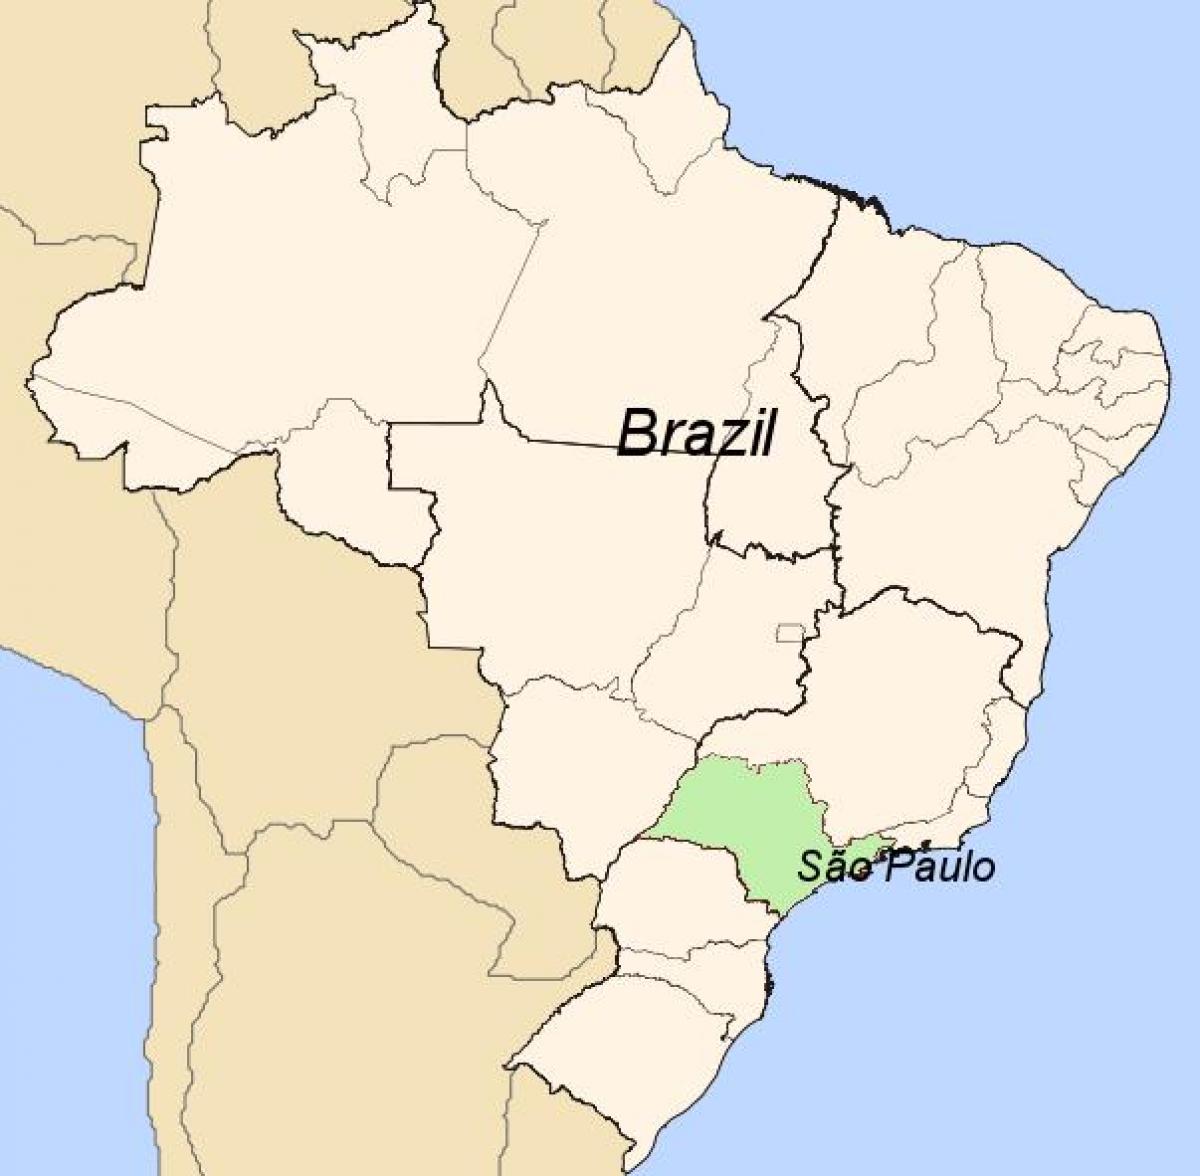 Mapa ng São Paulo sa Brazil